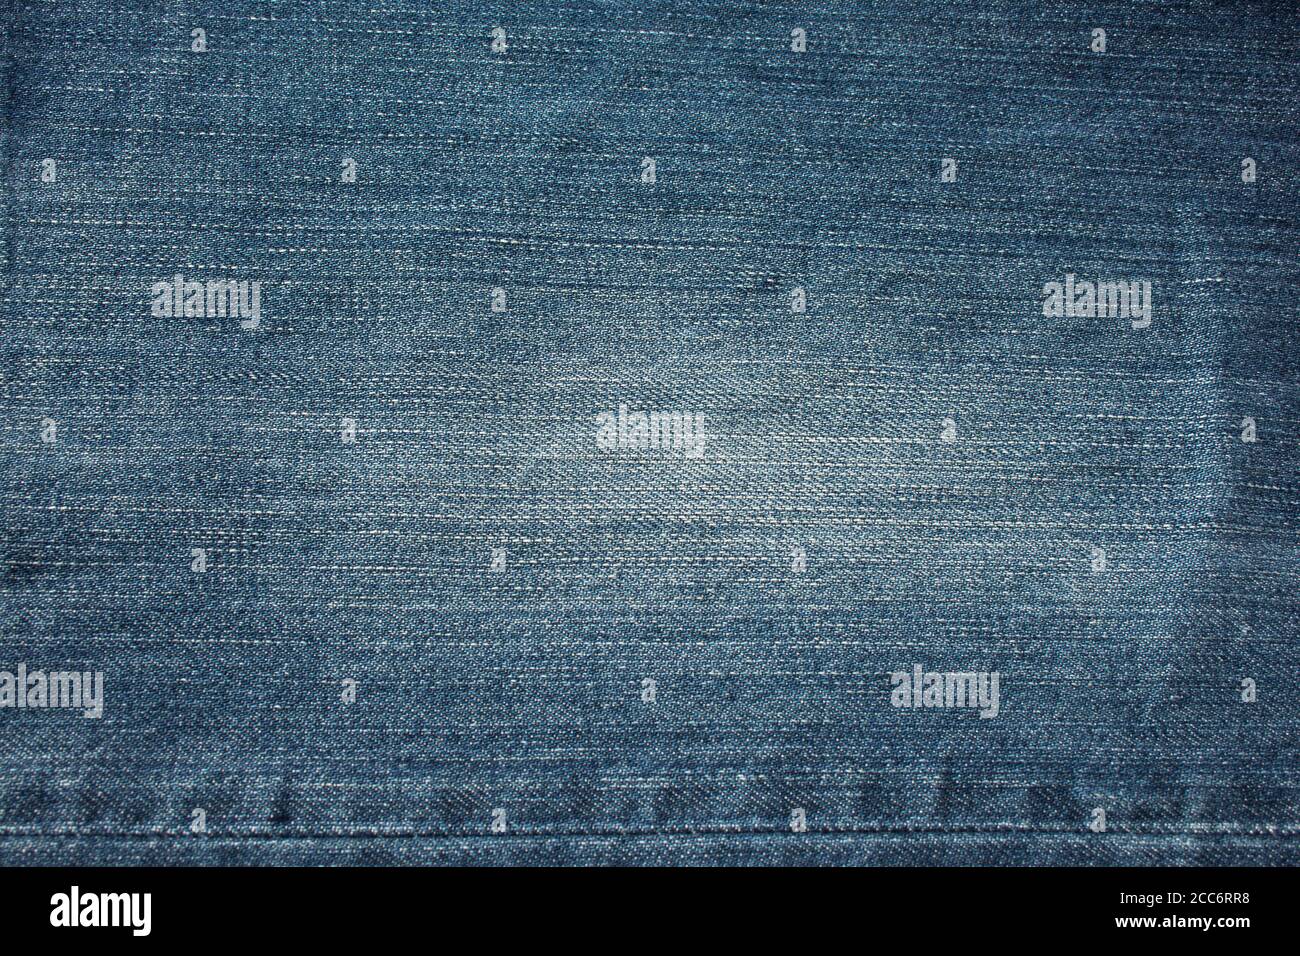 blue frayed denim jeans background Stock Photo - Alamy